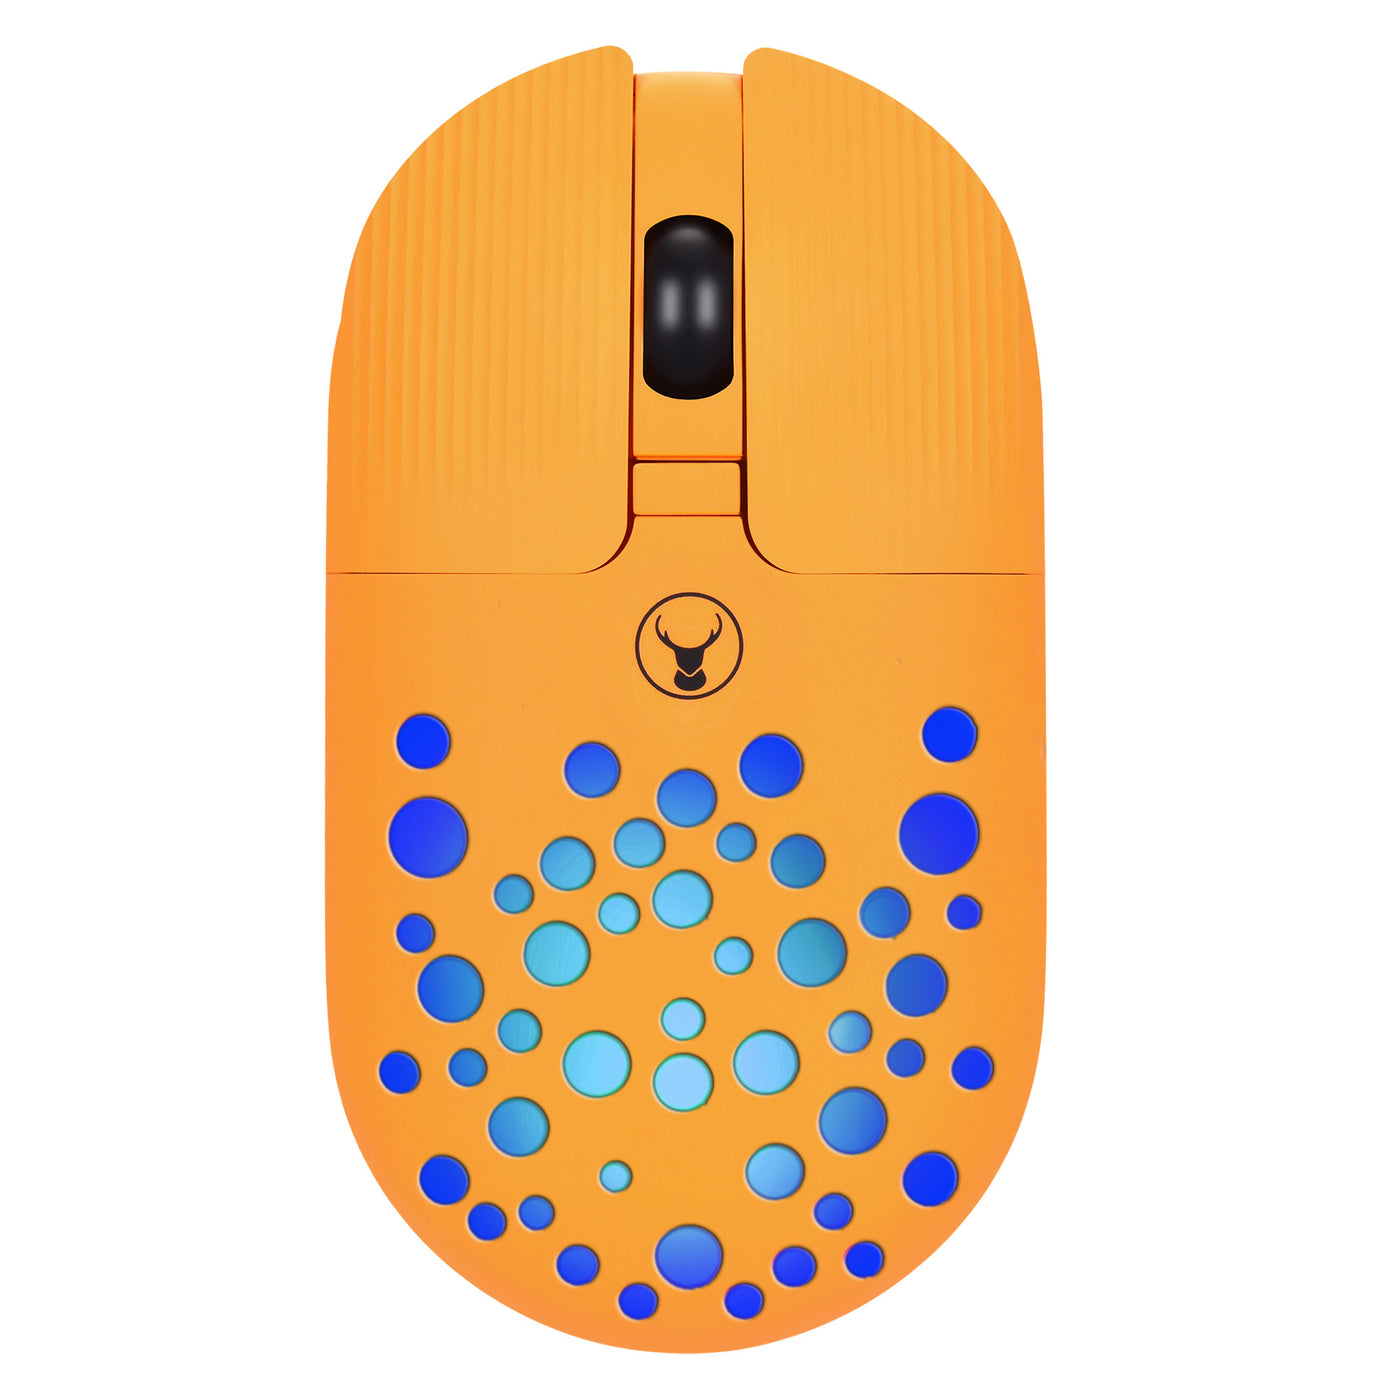 Bonelk Bluetooth/Wireless RGB 4D Mouse, 800-1600 DPI, USB-C, M-270 - Orange